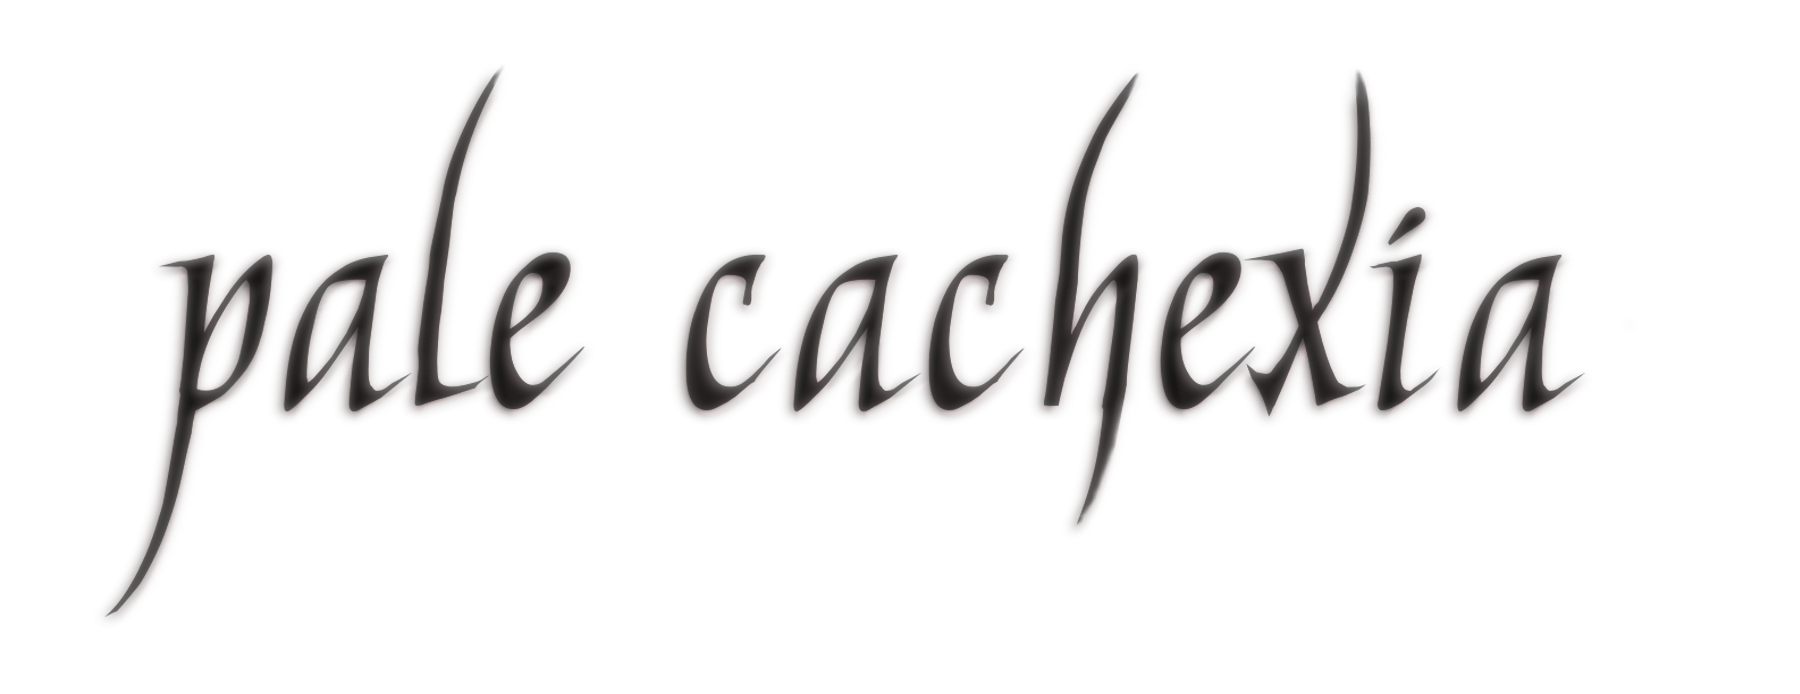 Pale Cachexia logo dark text